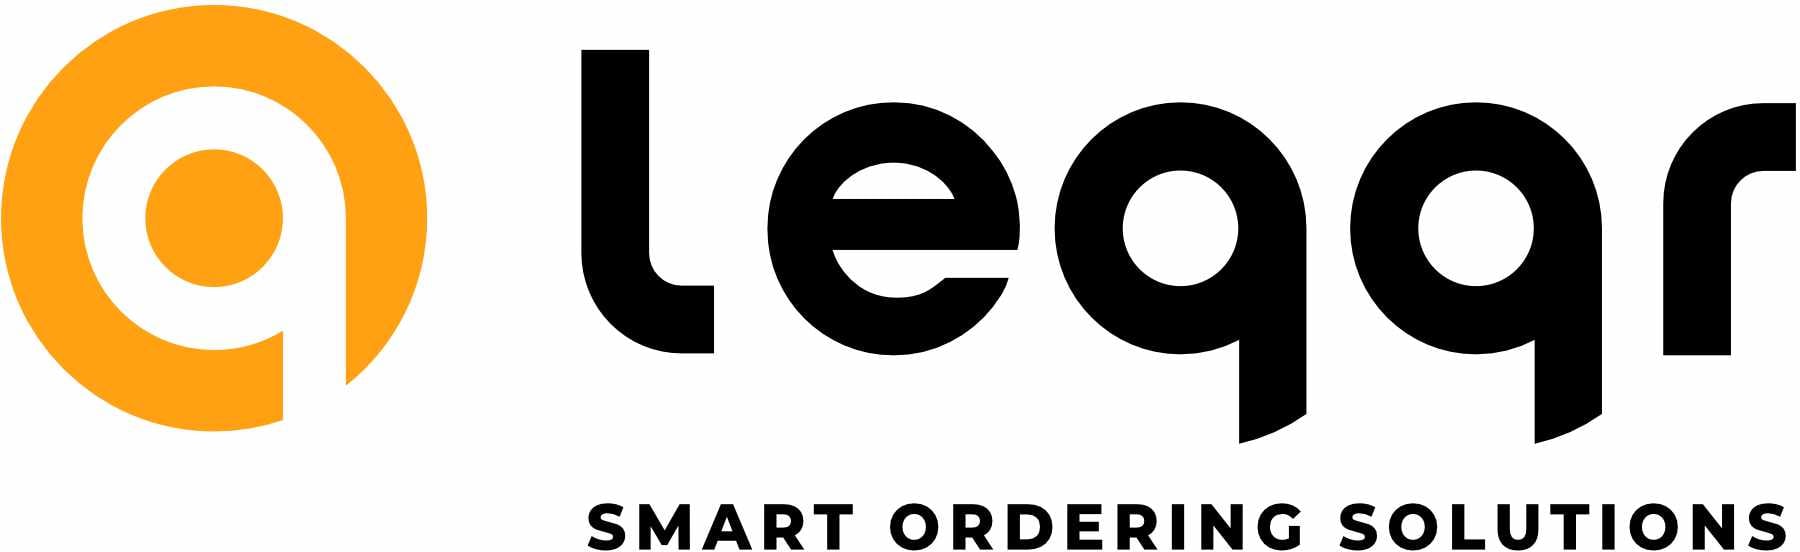 LEQQR logo - tagline 1800